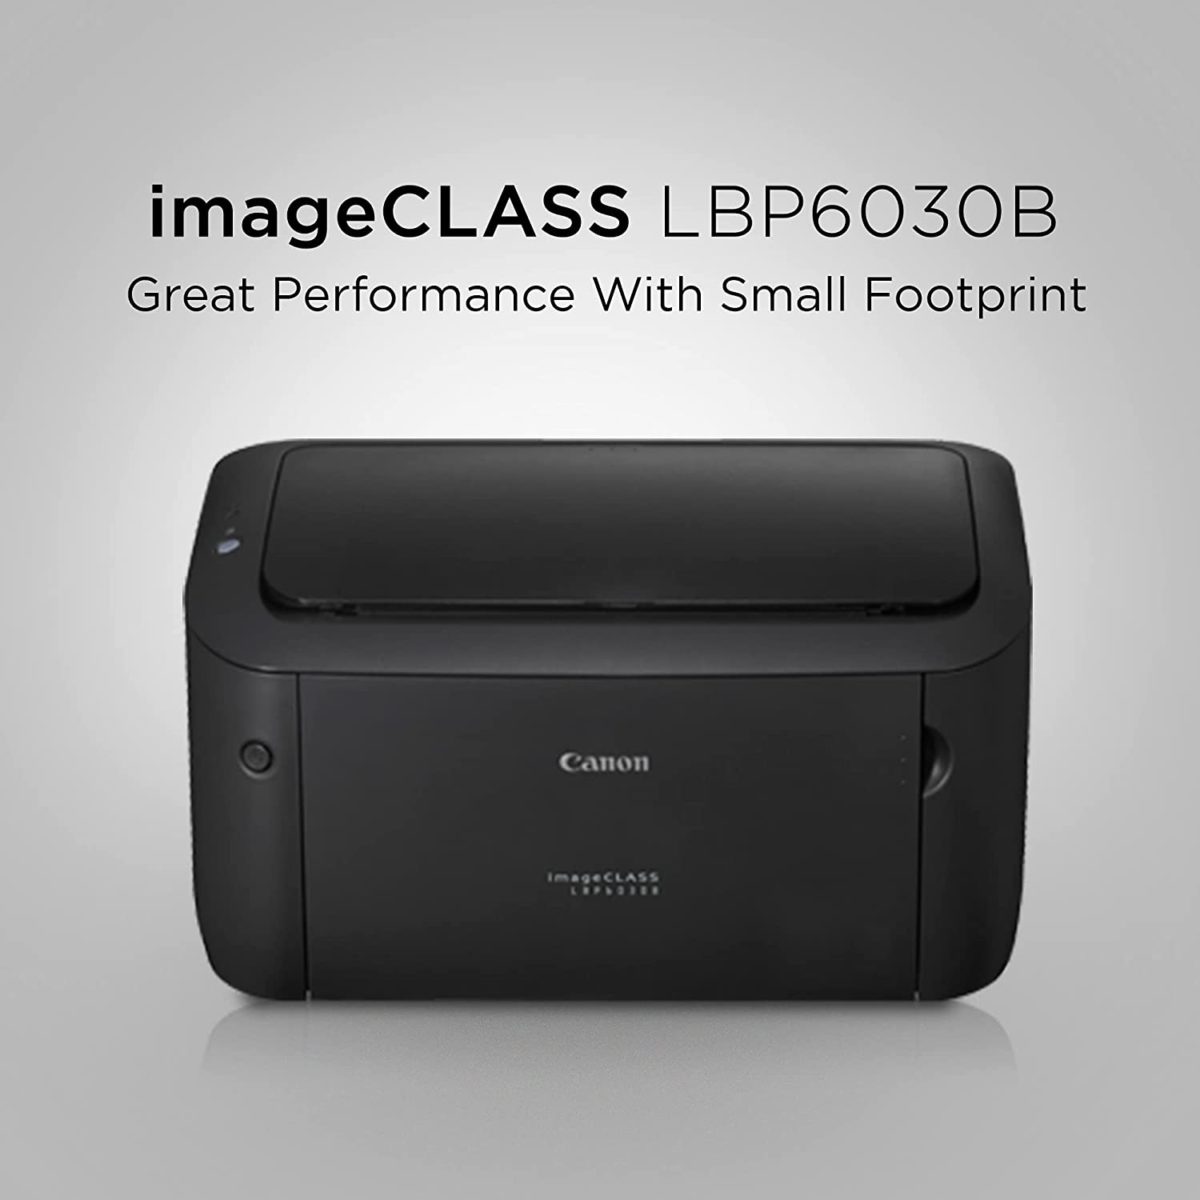 Canon imageCLASS LBP6030B